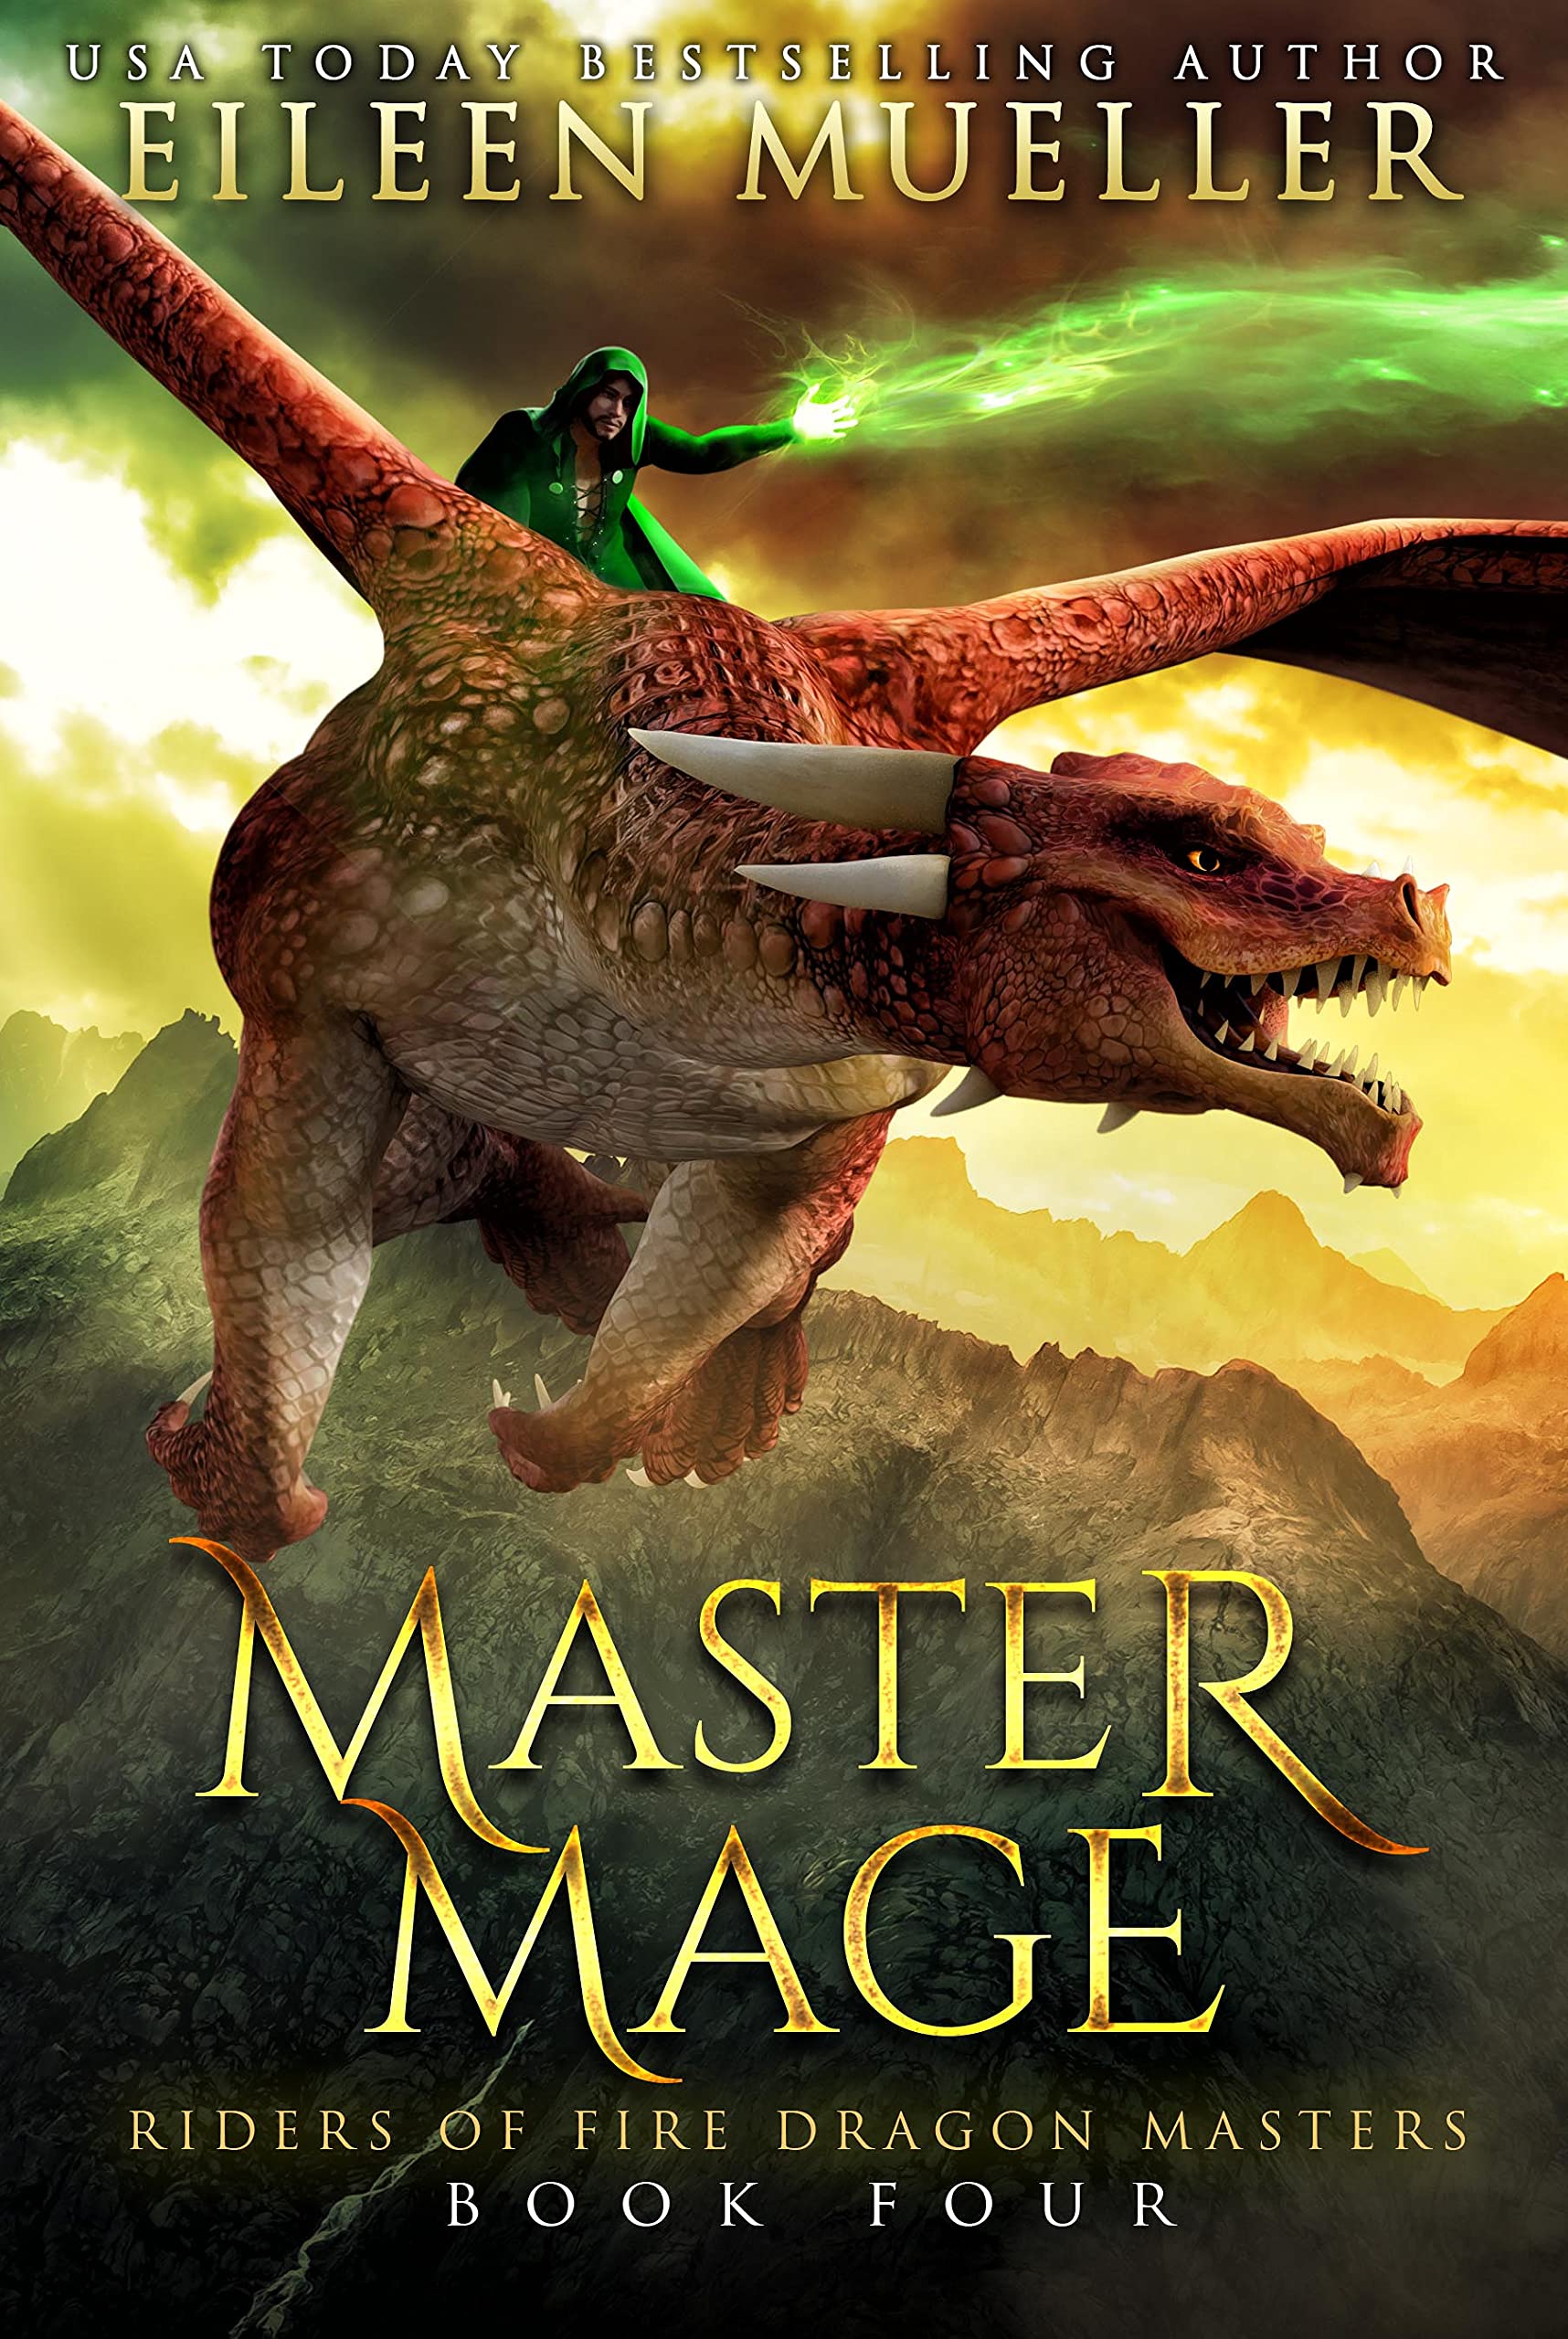 Beast Mage: A progression fantasy adventure by Derek Alan Siddoway